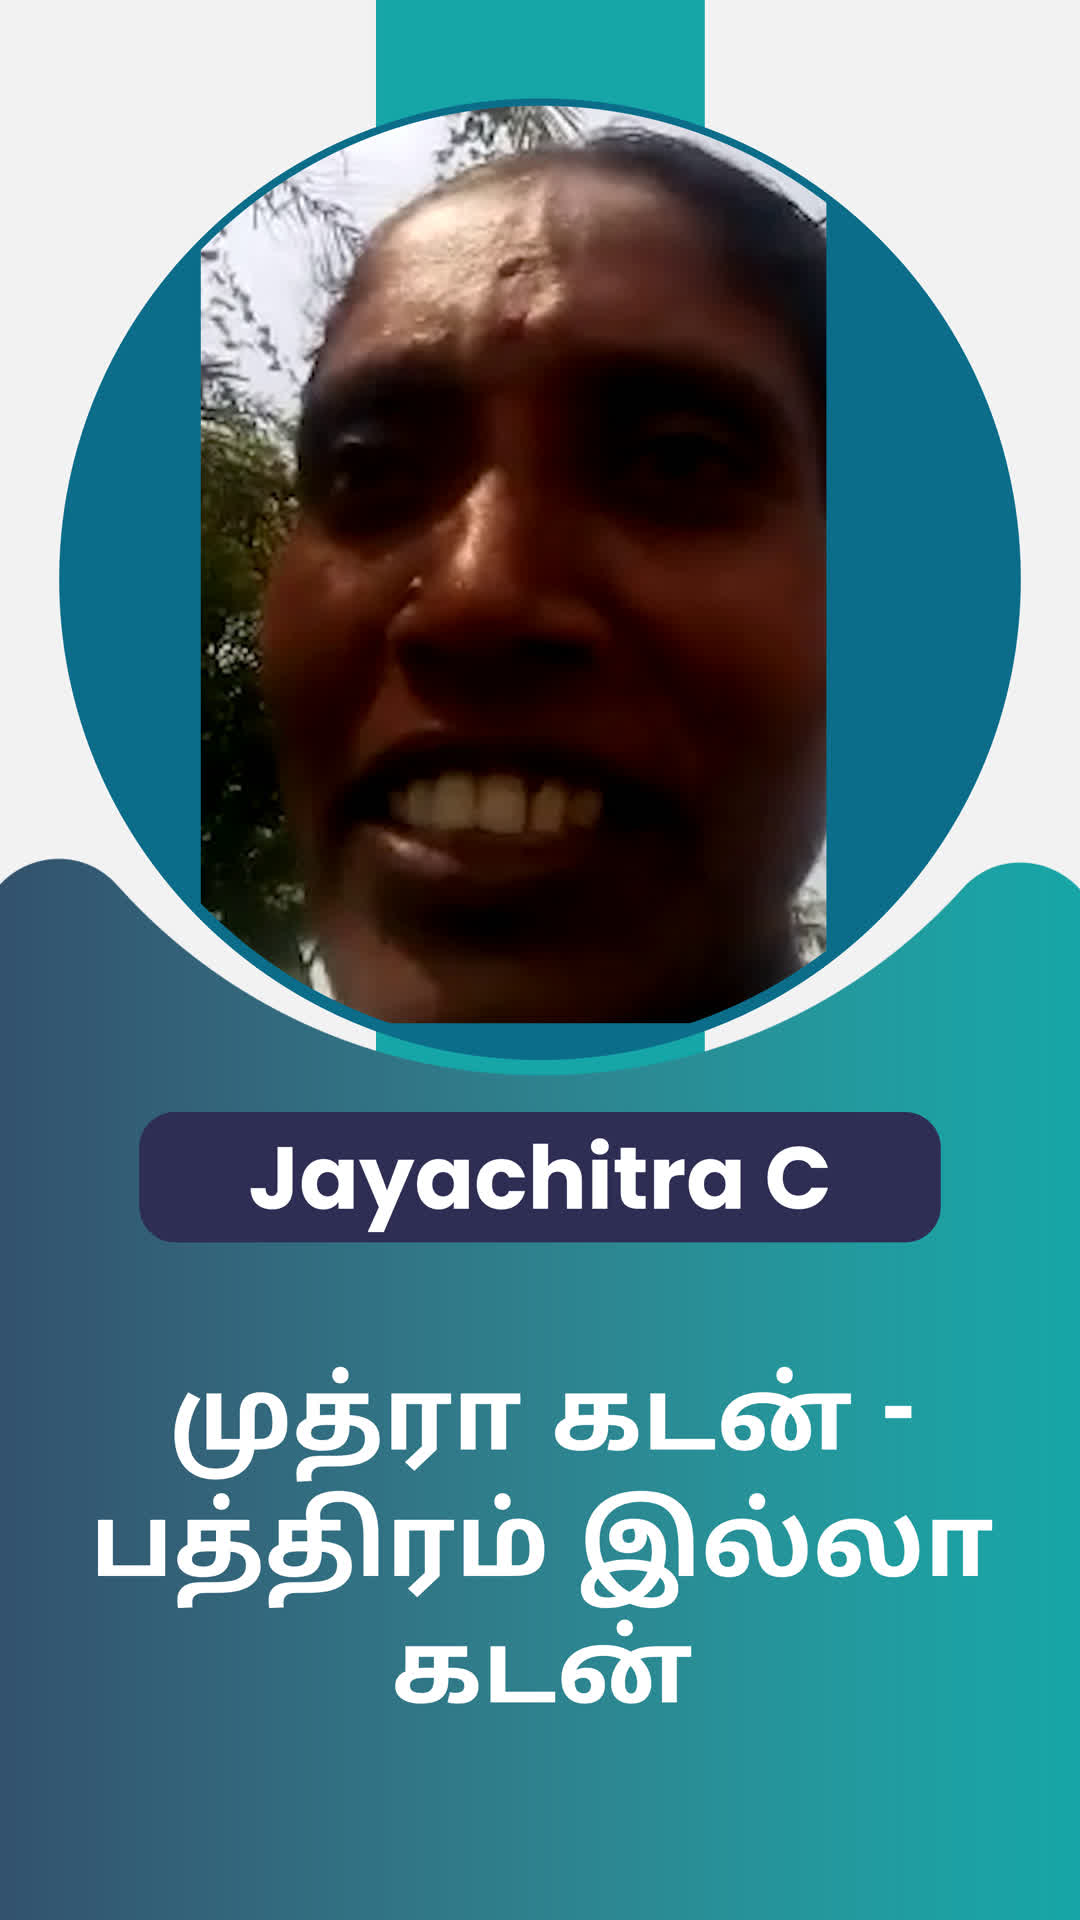 S.jayachitra's Honest Review of ffreedom app - Karur ,Tamil Nadu